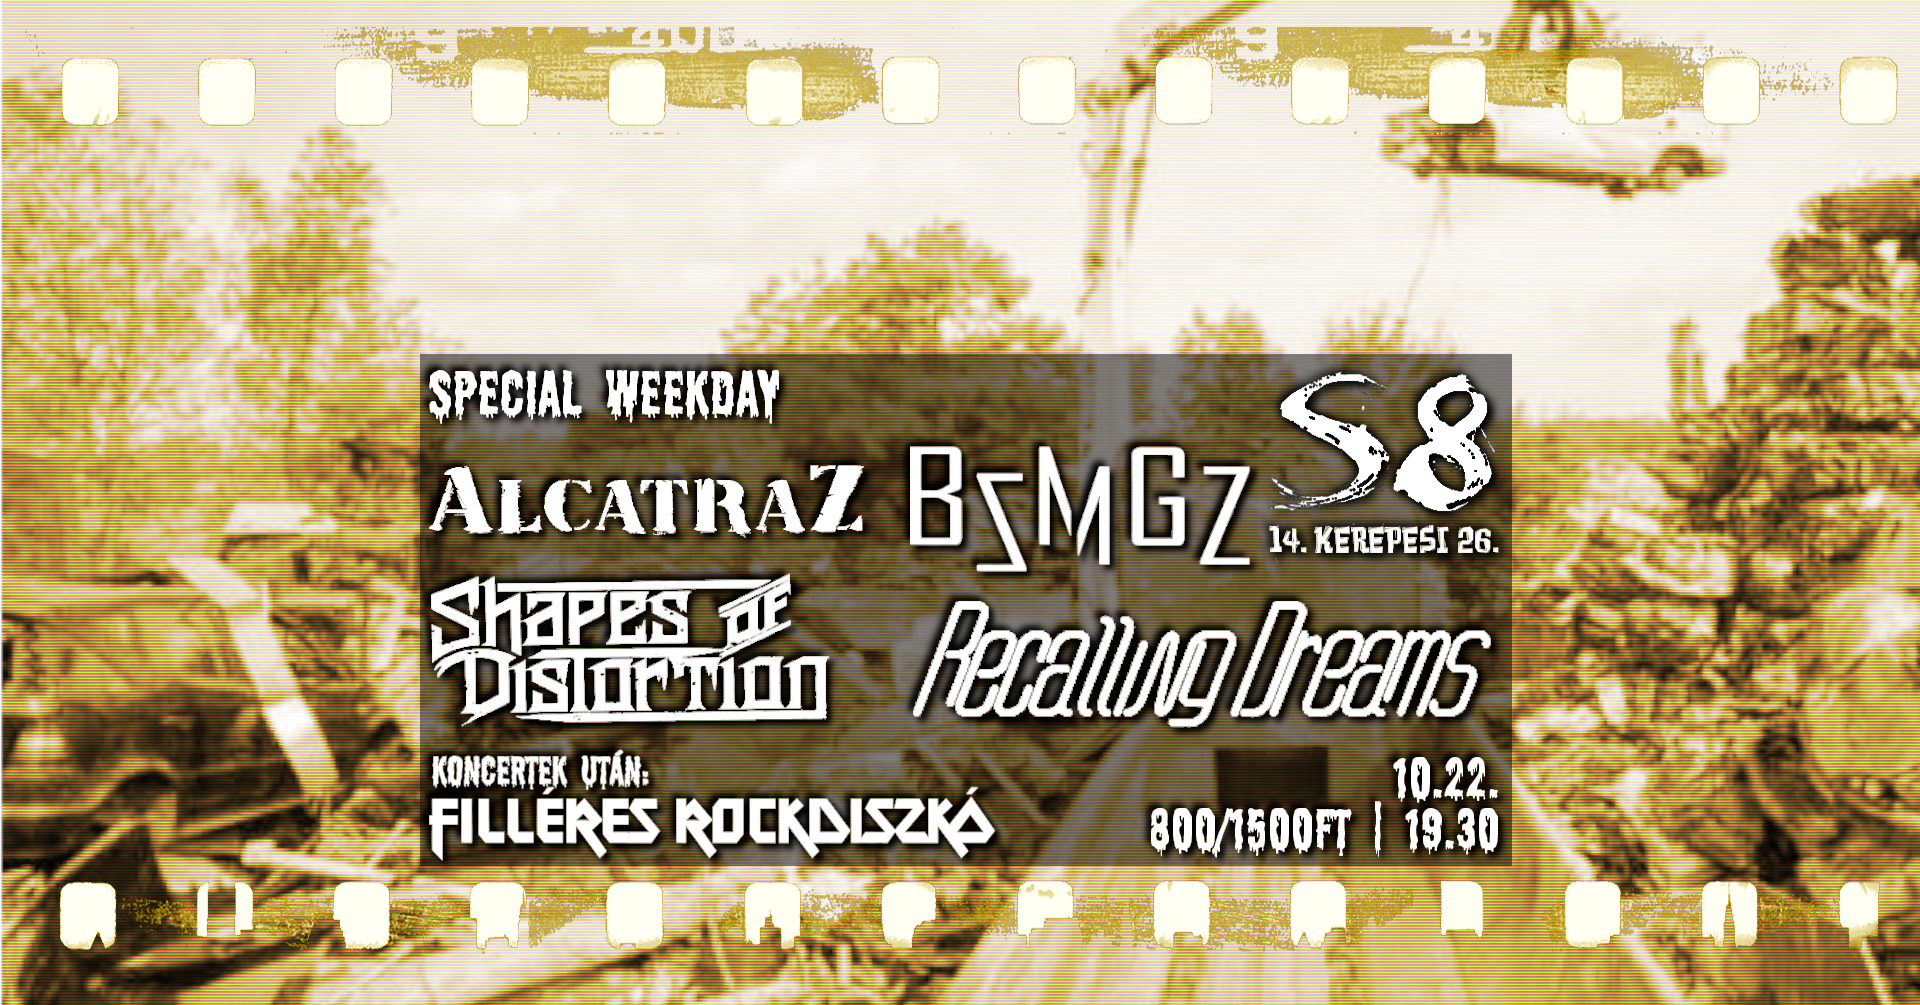 Special Weekday - BZMGZ I The Alcatraz I Shapes of Distortion I Recalling Dreams